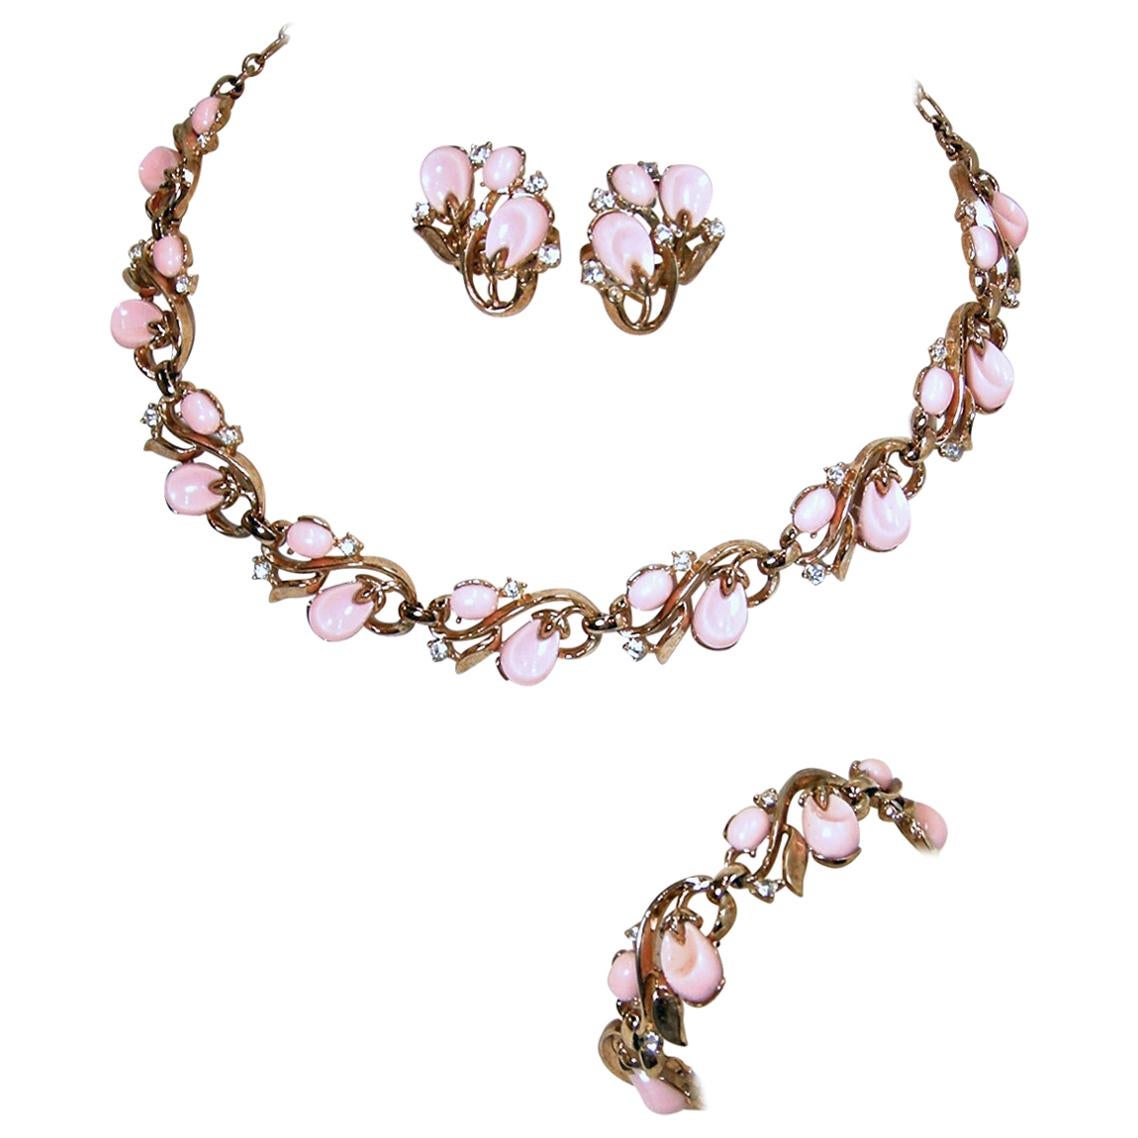 Vintage Signed Trifari Pink Parure … Necklace, Bracelet & Earrings For Sale